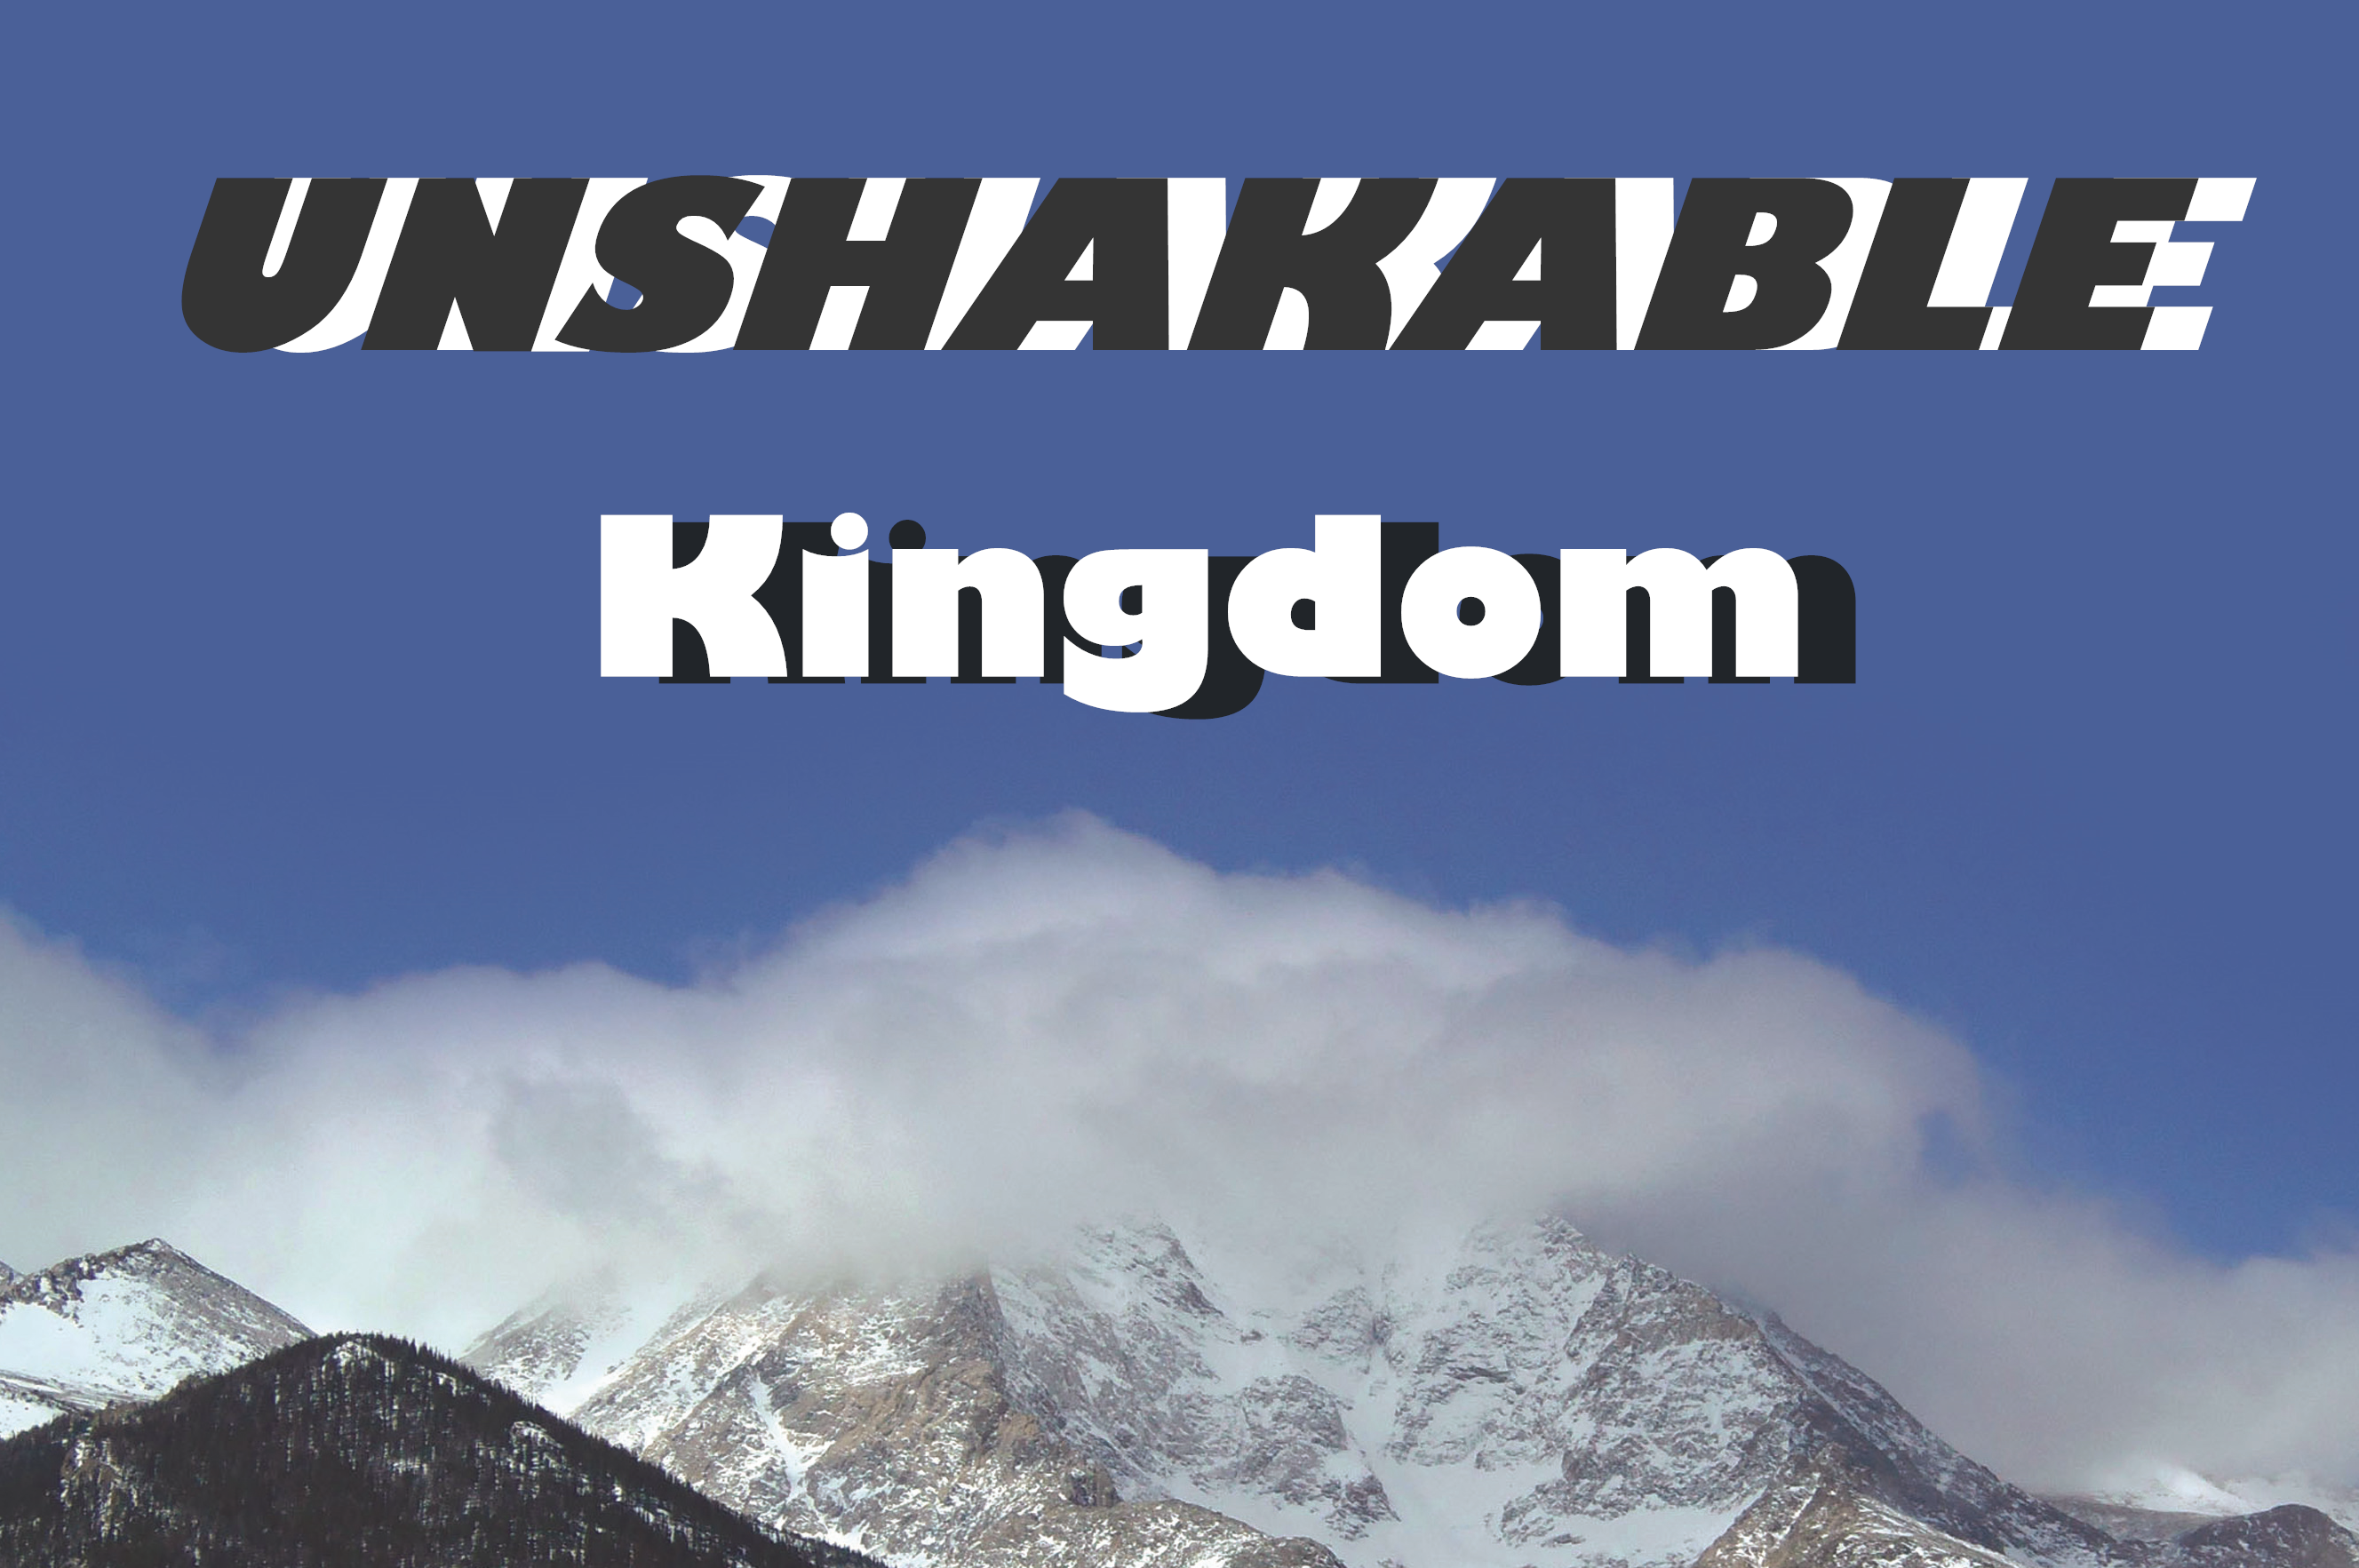 Unshakable Kingdom Part 2